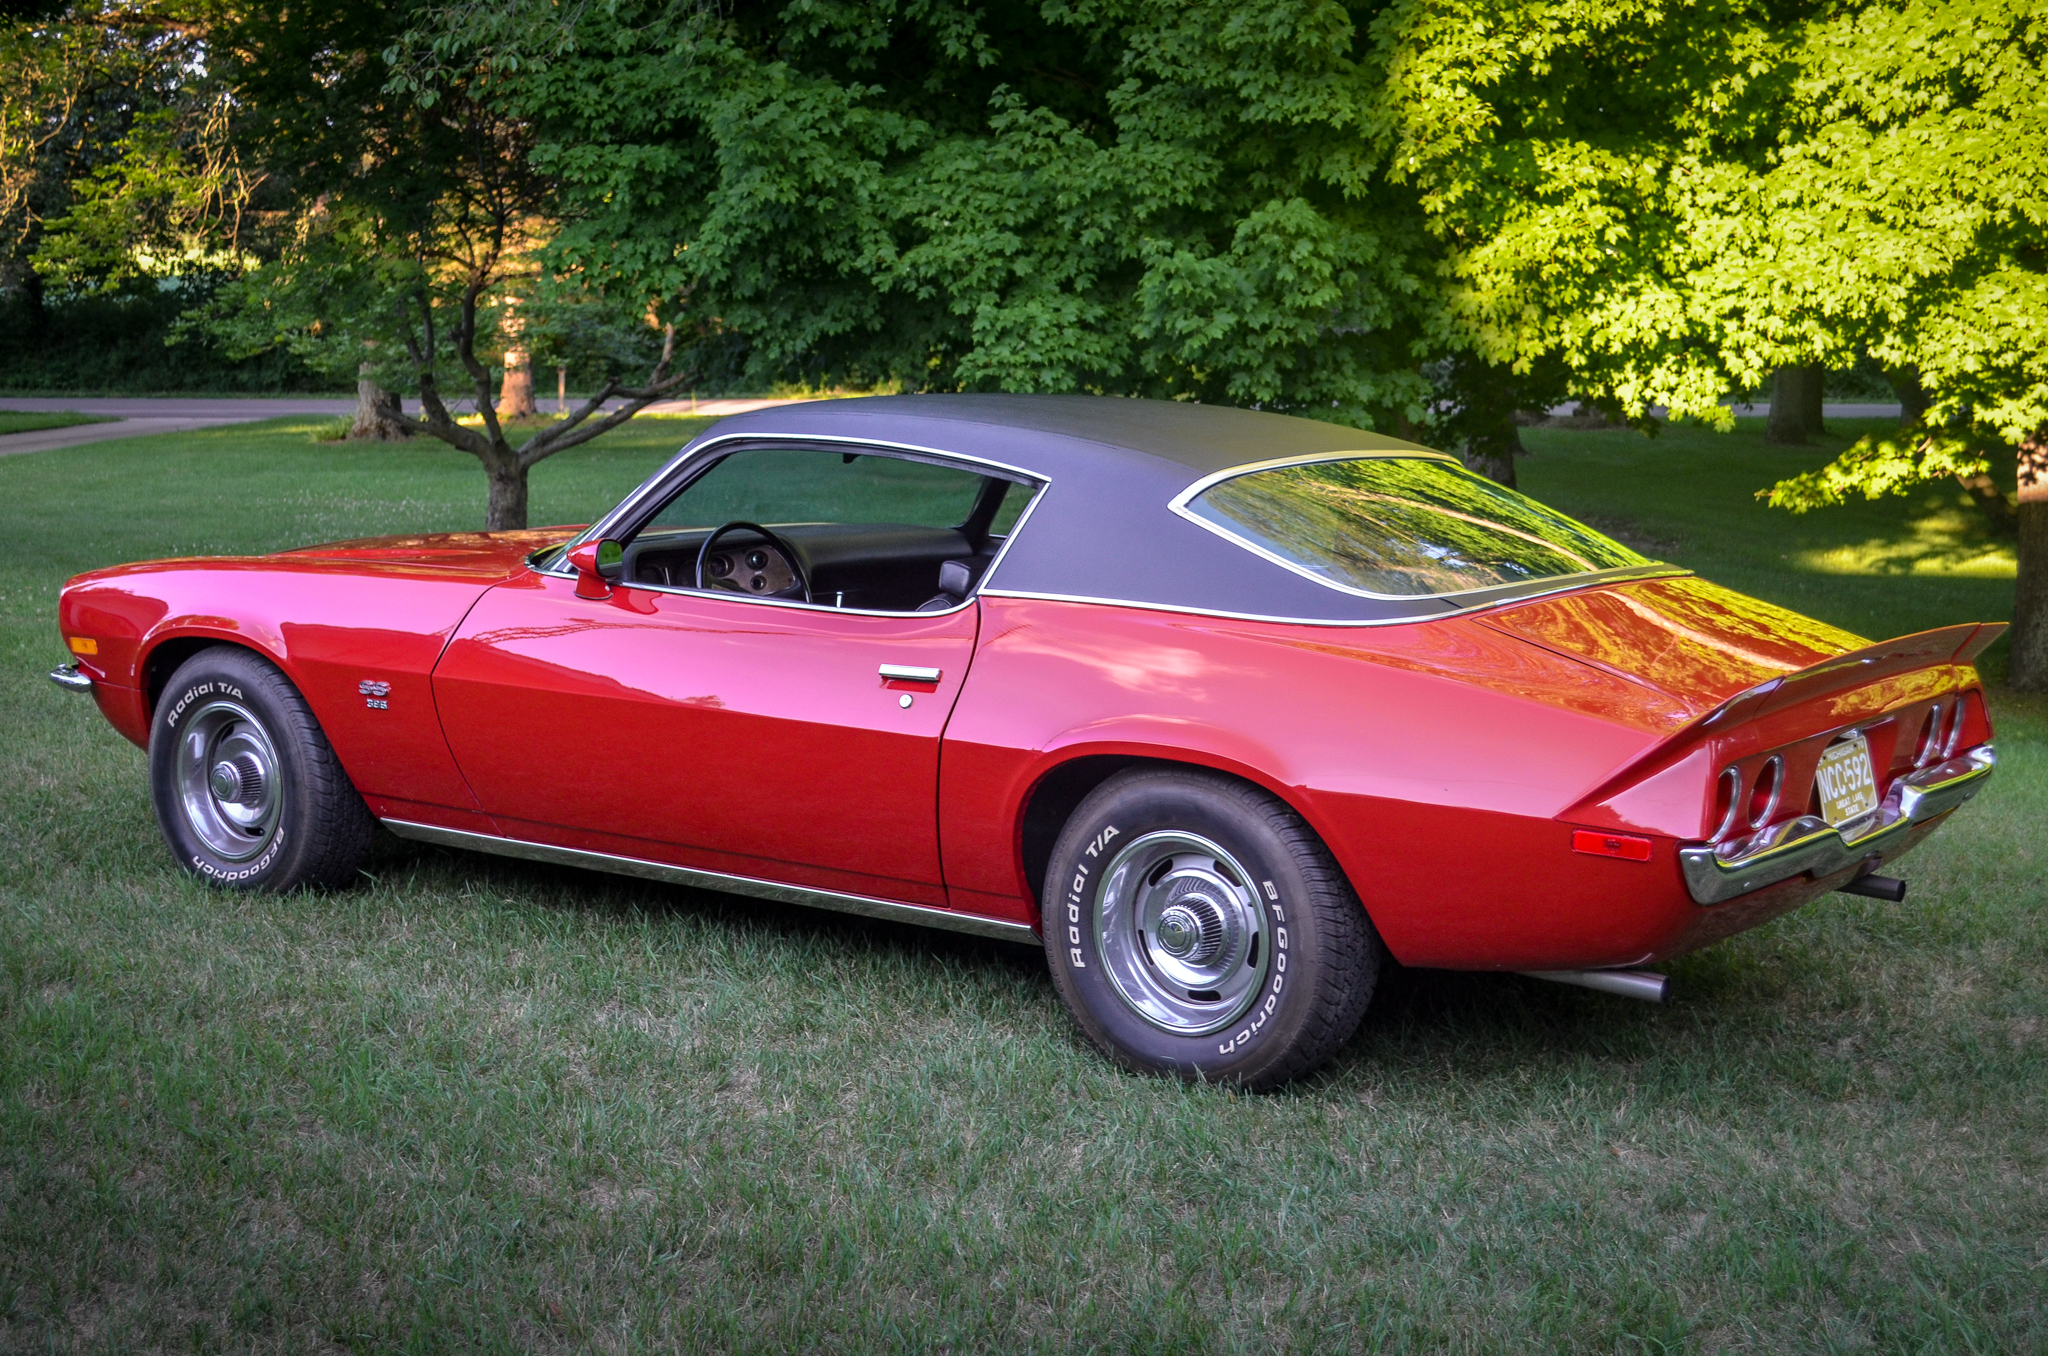 1970 Camaro-repainted in the original cranberry red